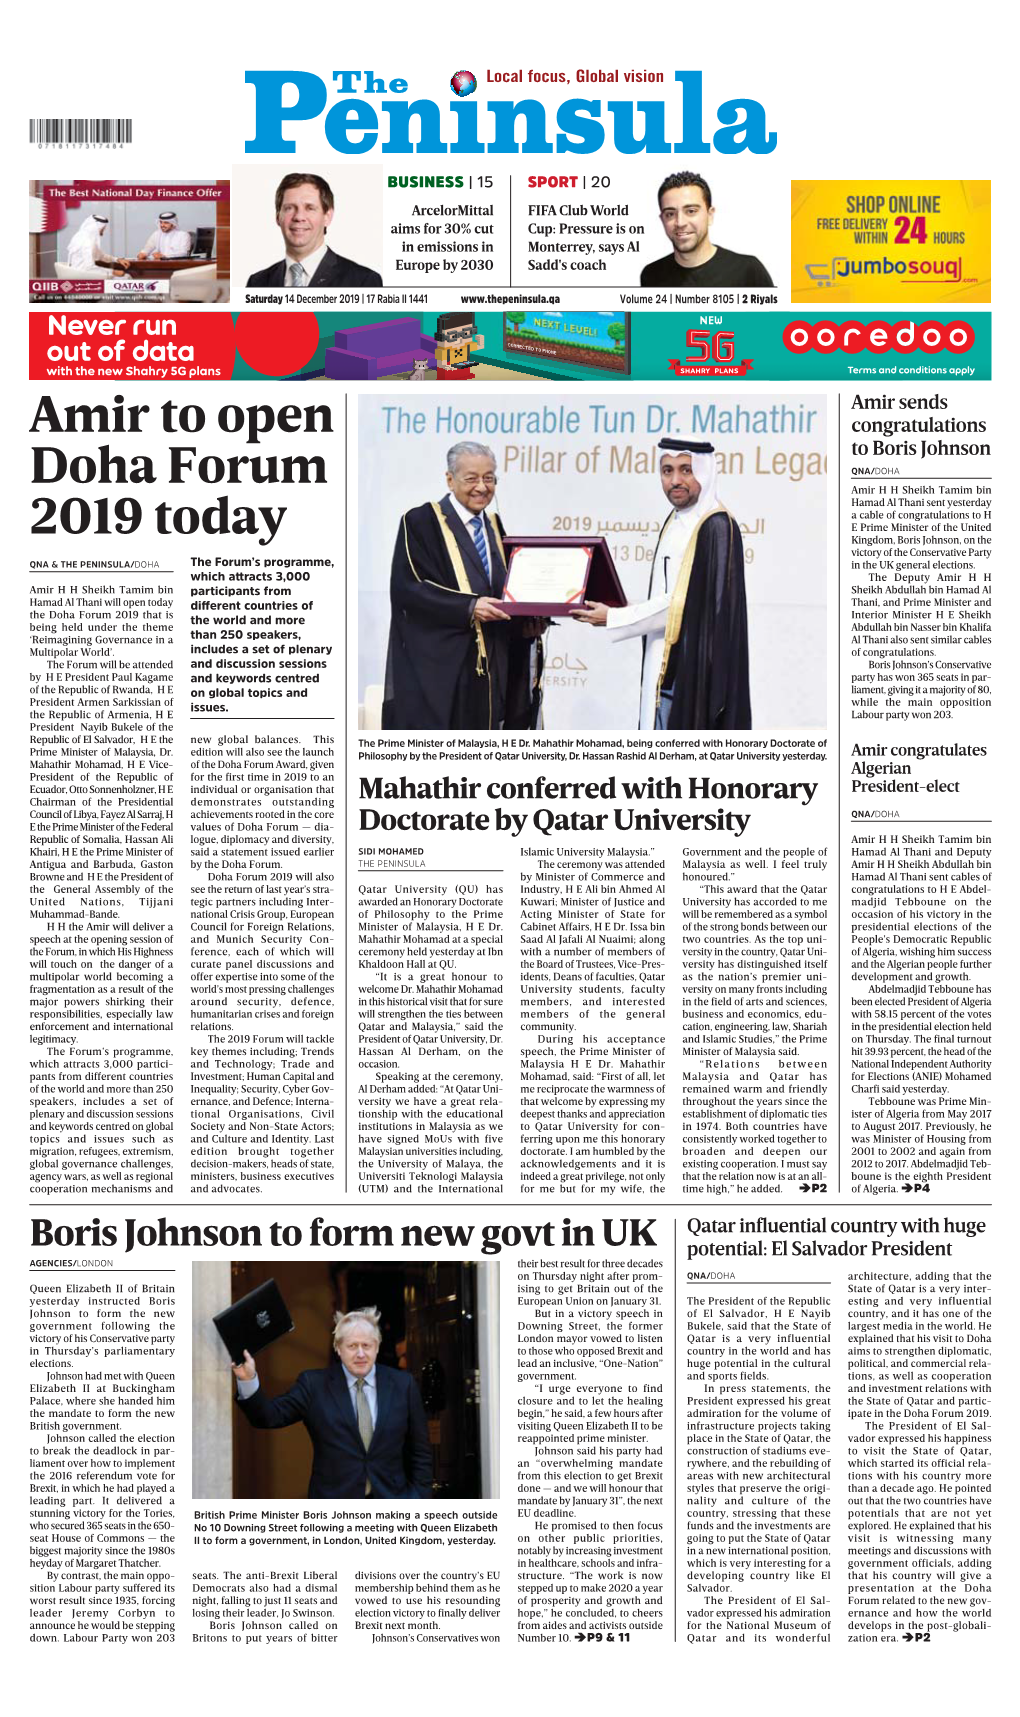 Amir to Open Doha Forum 2019 Today